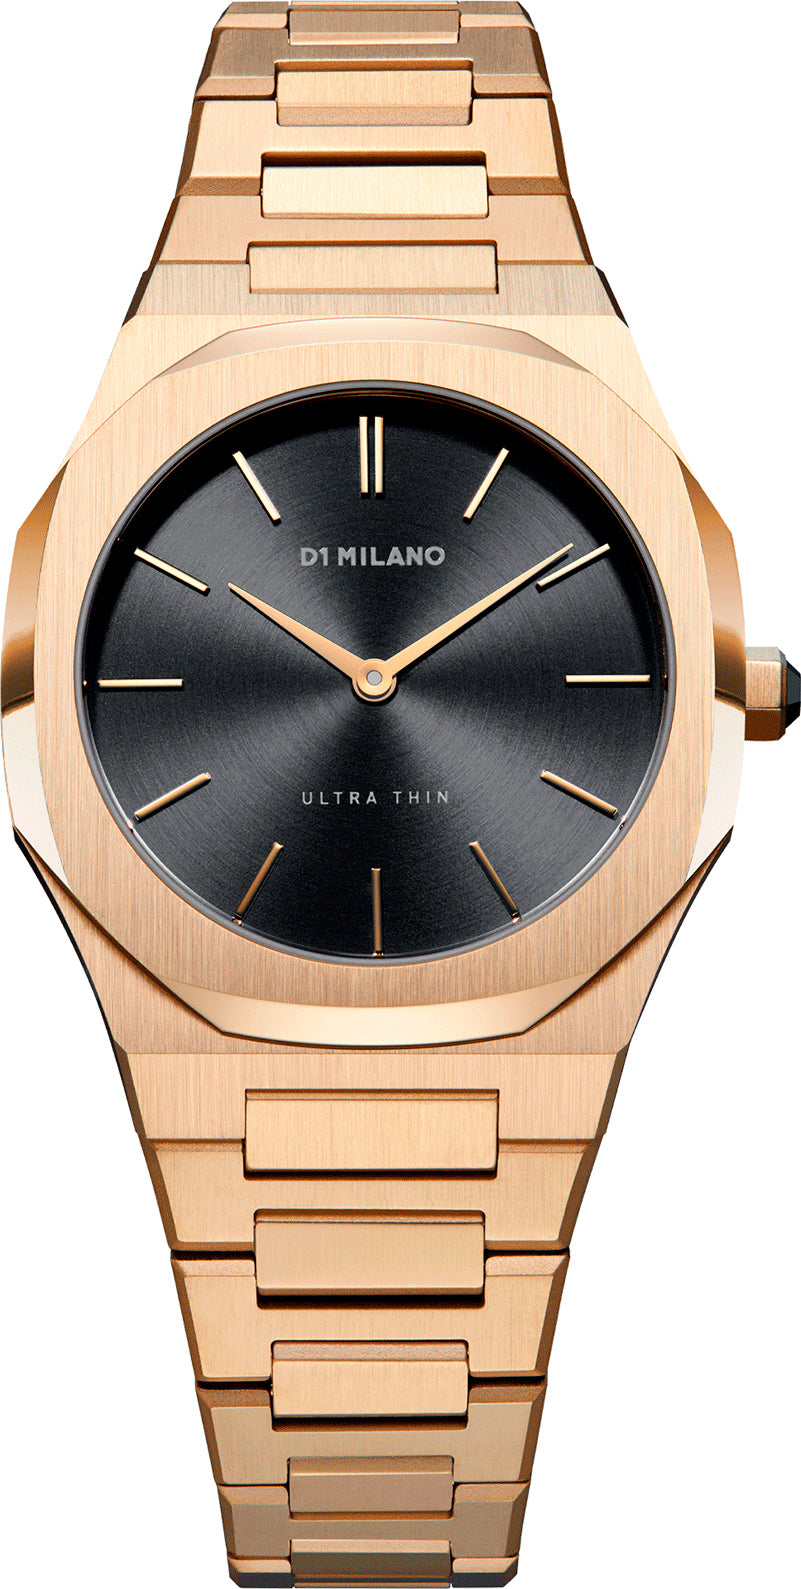 Photos - Wrist Watch Milano D1  Watch Ultra Thin DLM-081 